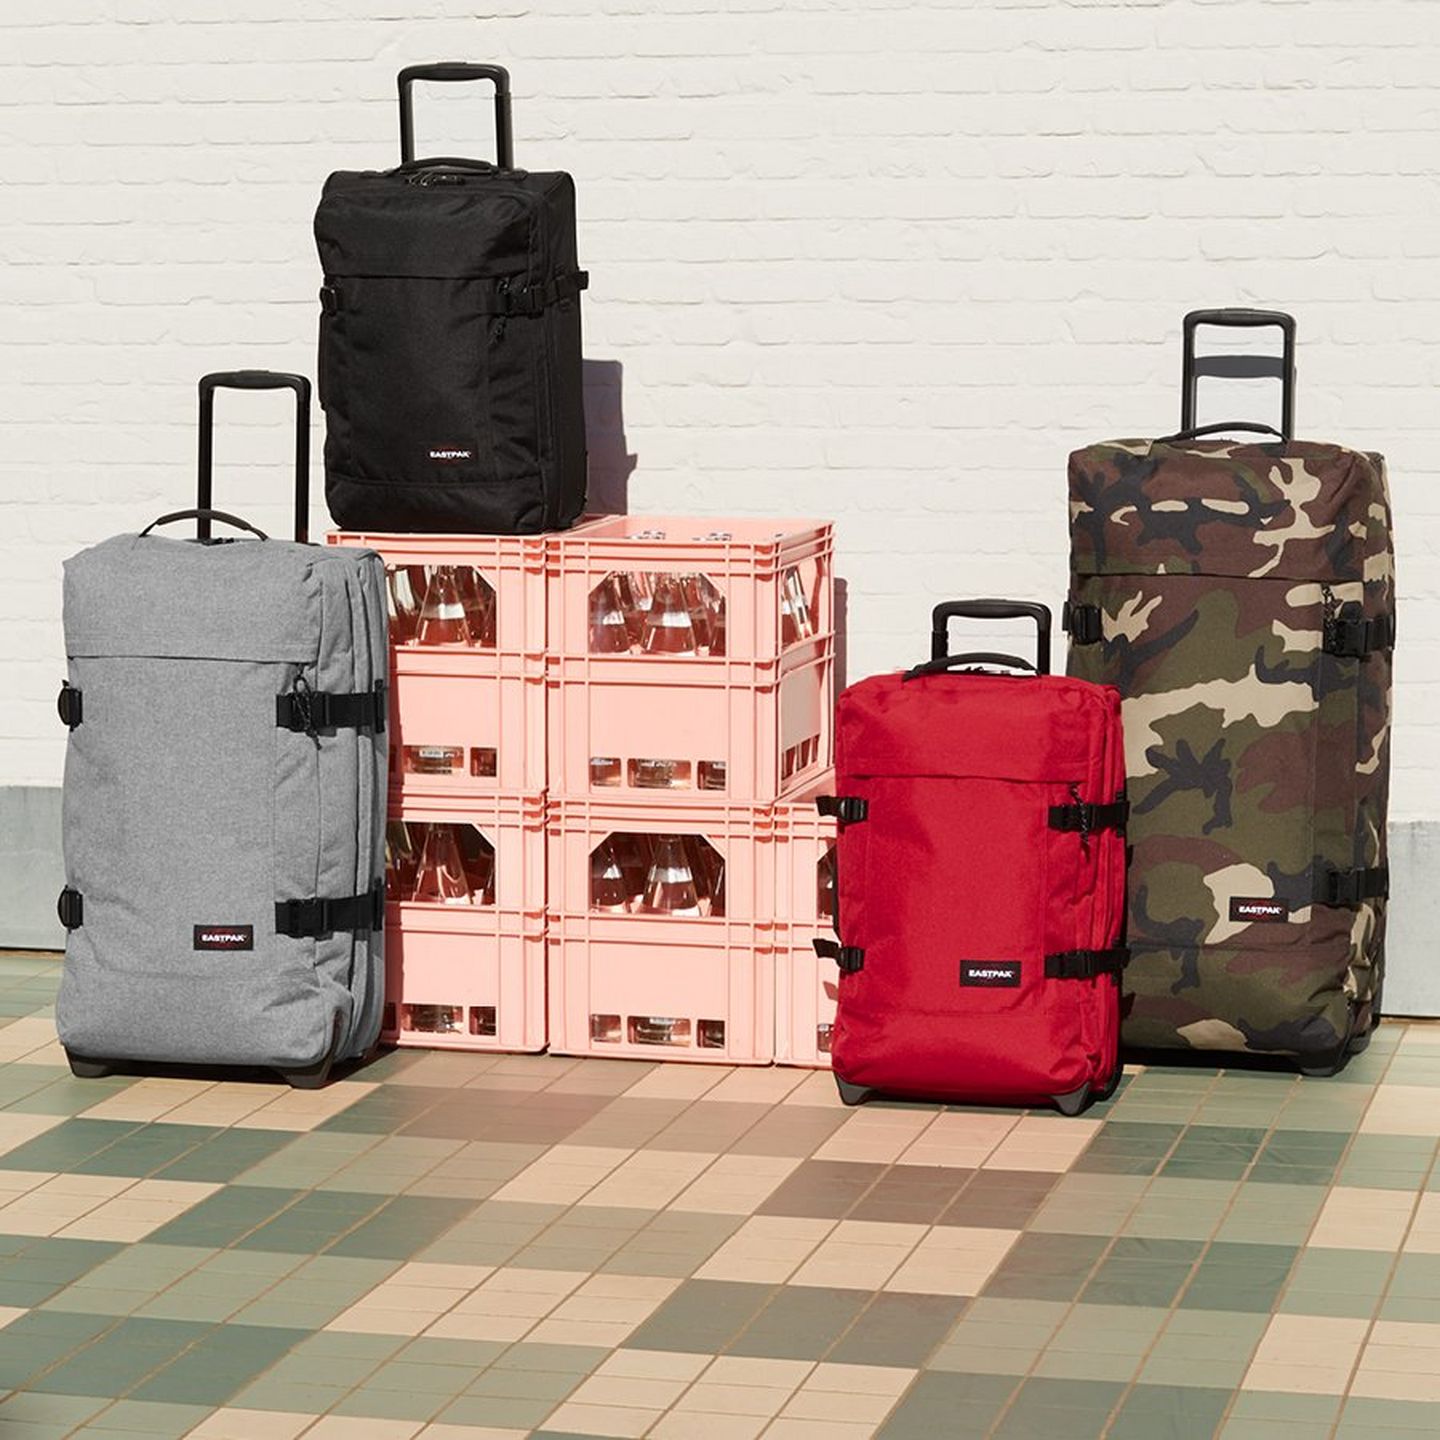 Ik zou liever skiën roze cabine koffer handbagage reisbagage afsluitbaar reizen in stijl Tassen & portemonnees Bagage & Reizen Rolkoffers unieke rolkoffer personaliseerbaar 